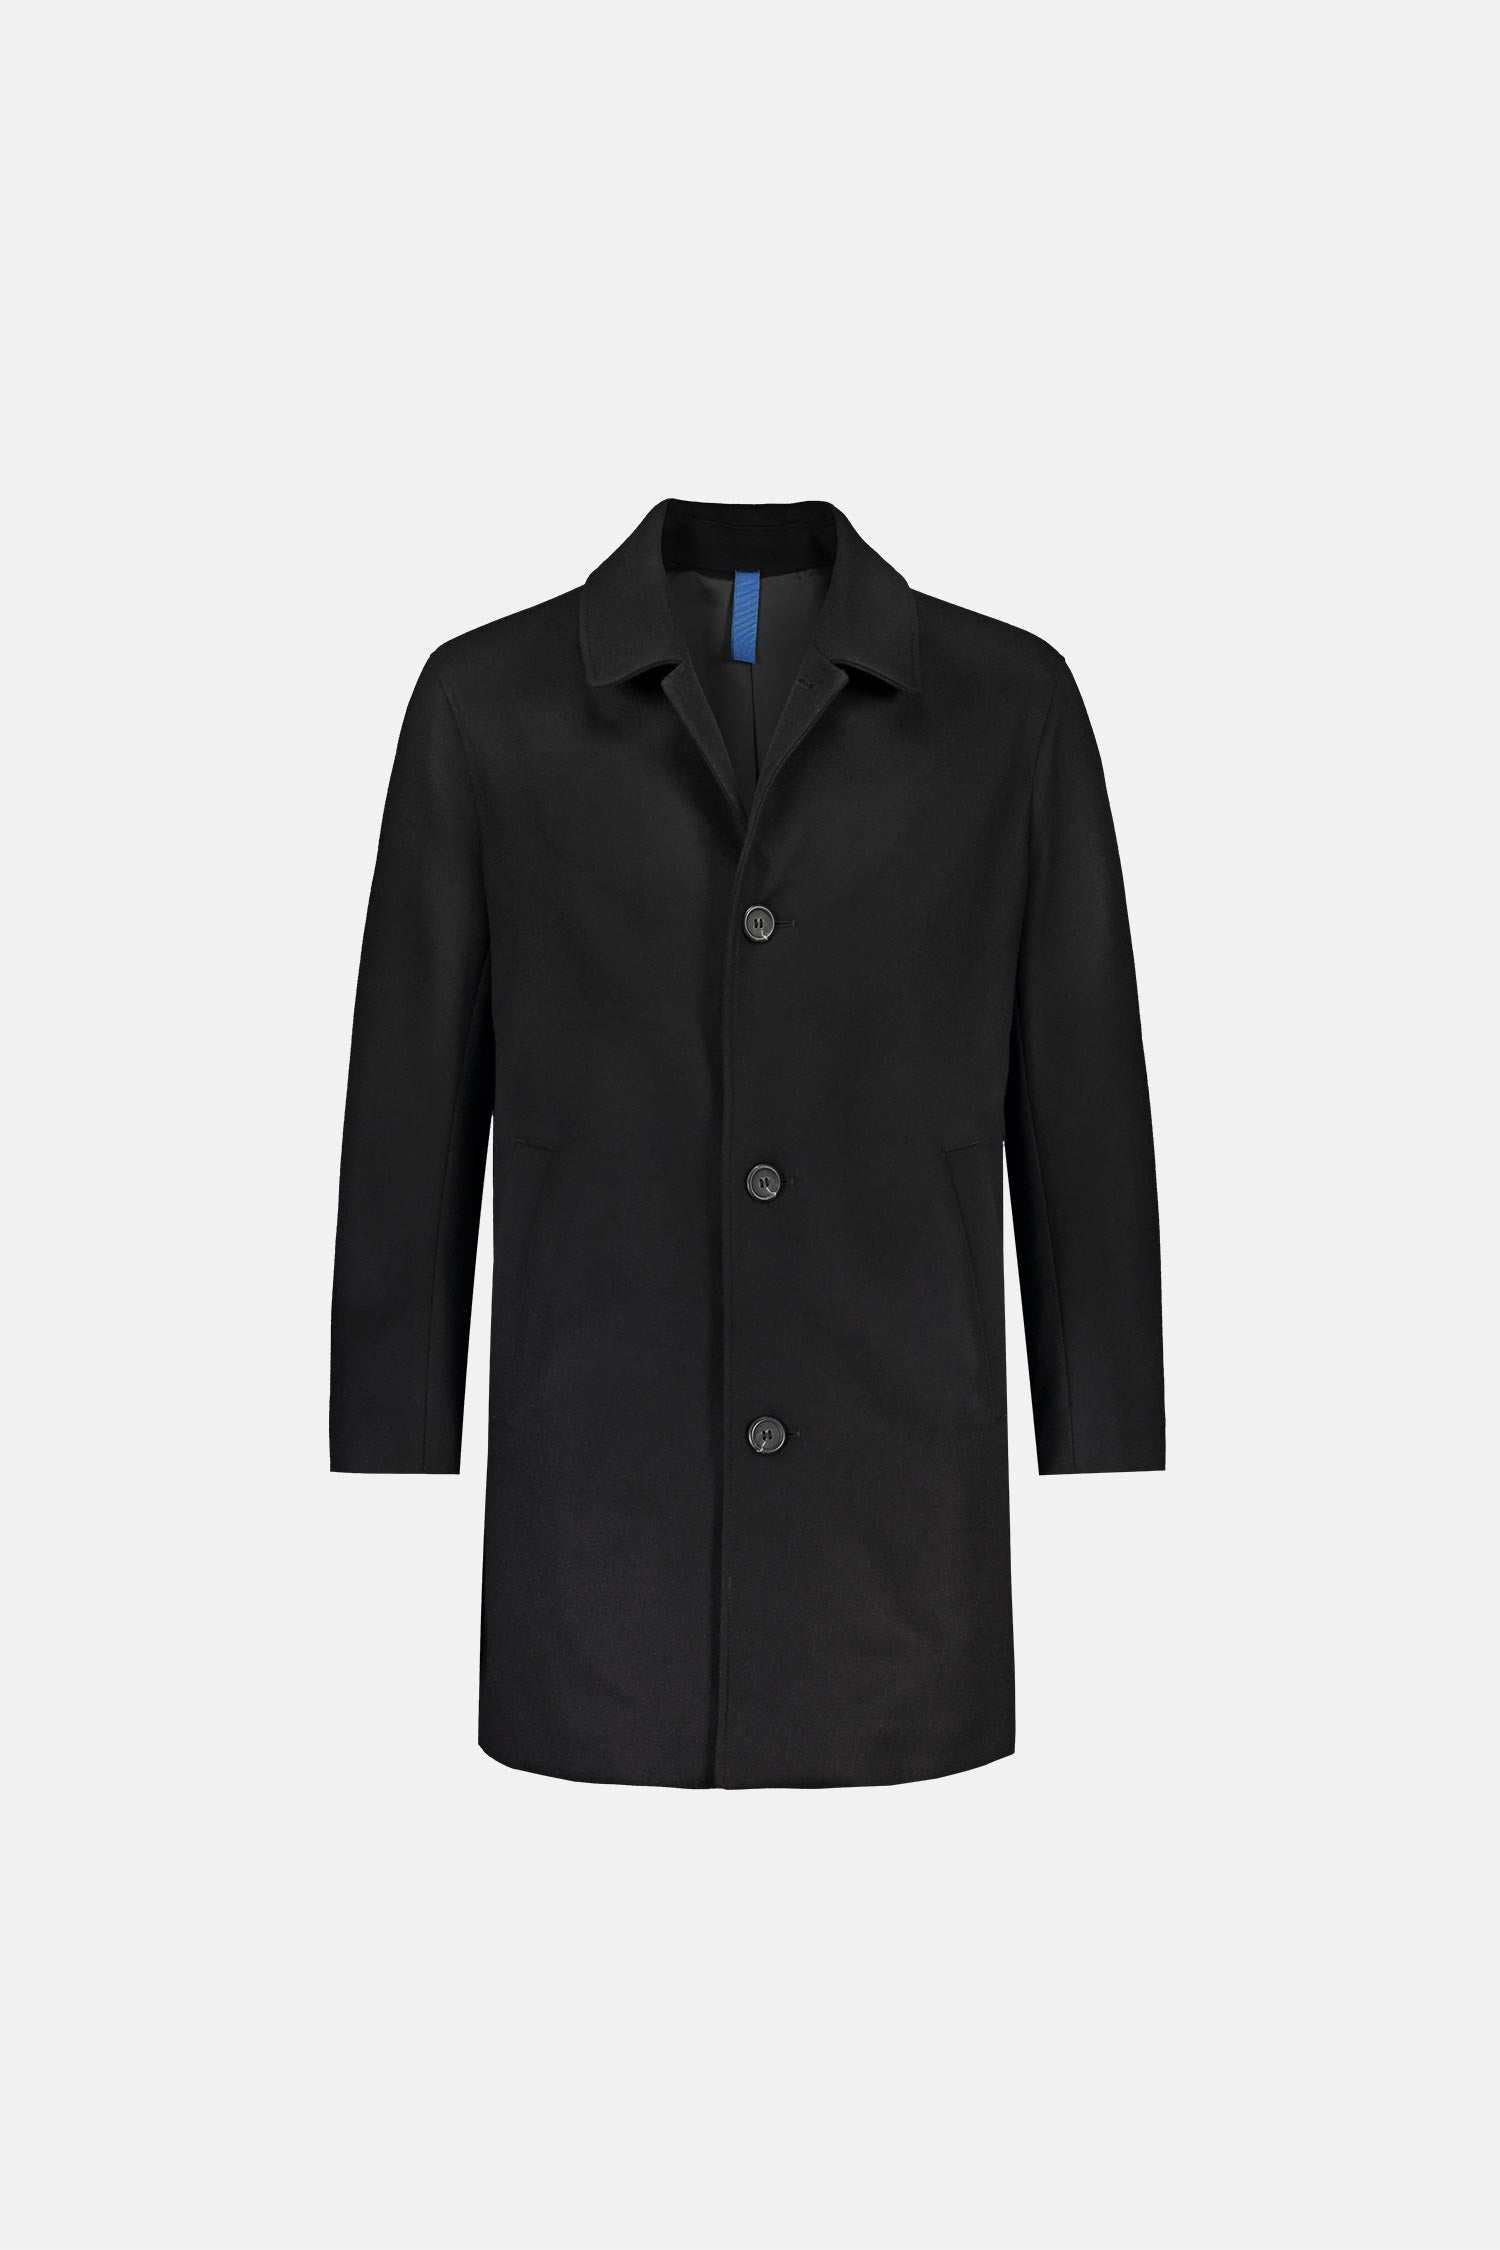 Frenn Petri premium quality sustainable recycled wool coat black